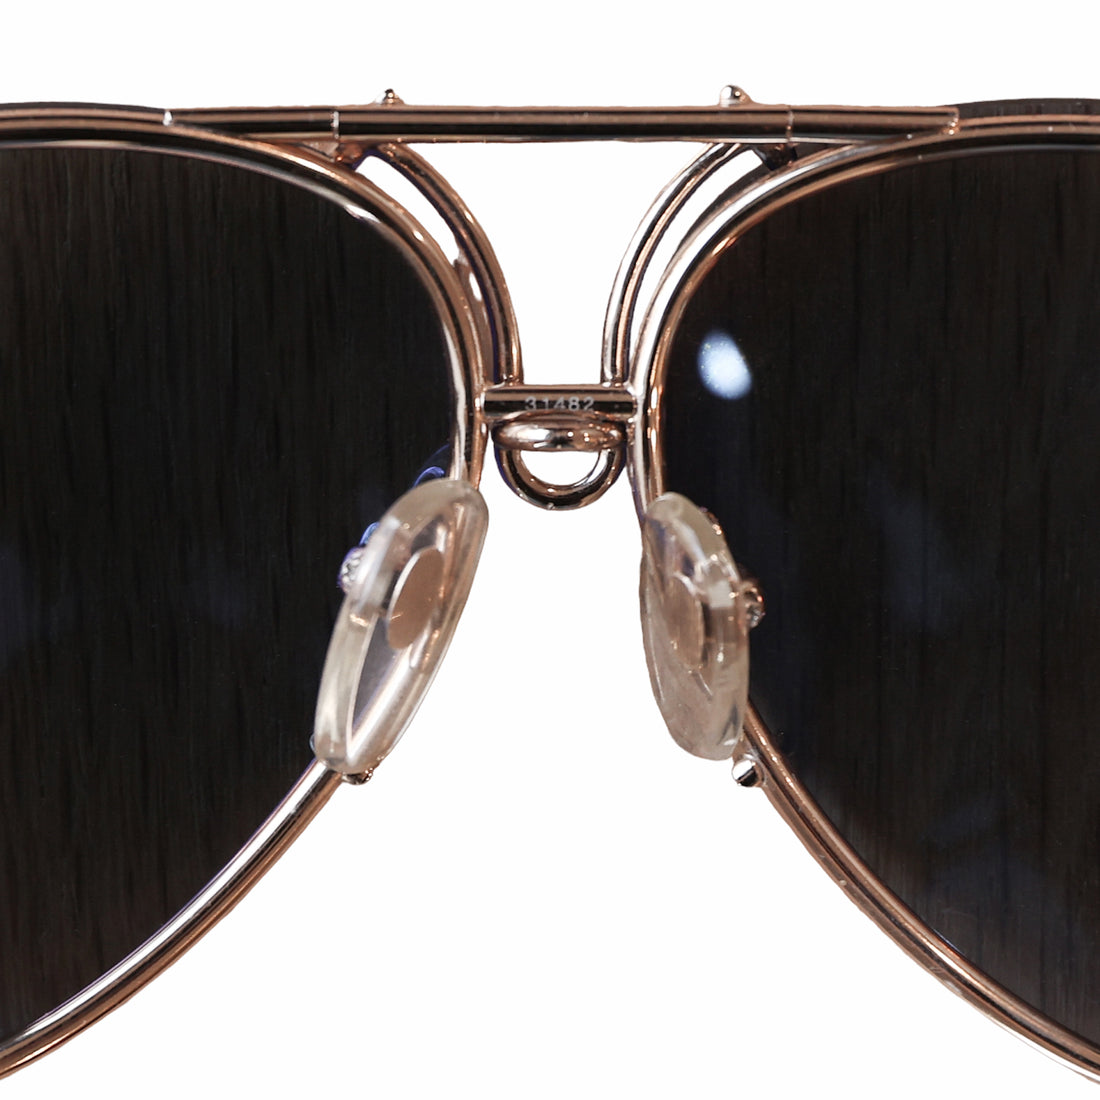 Porsche mirrored aviator sunglasses with spare lenses